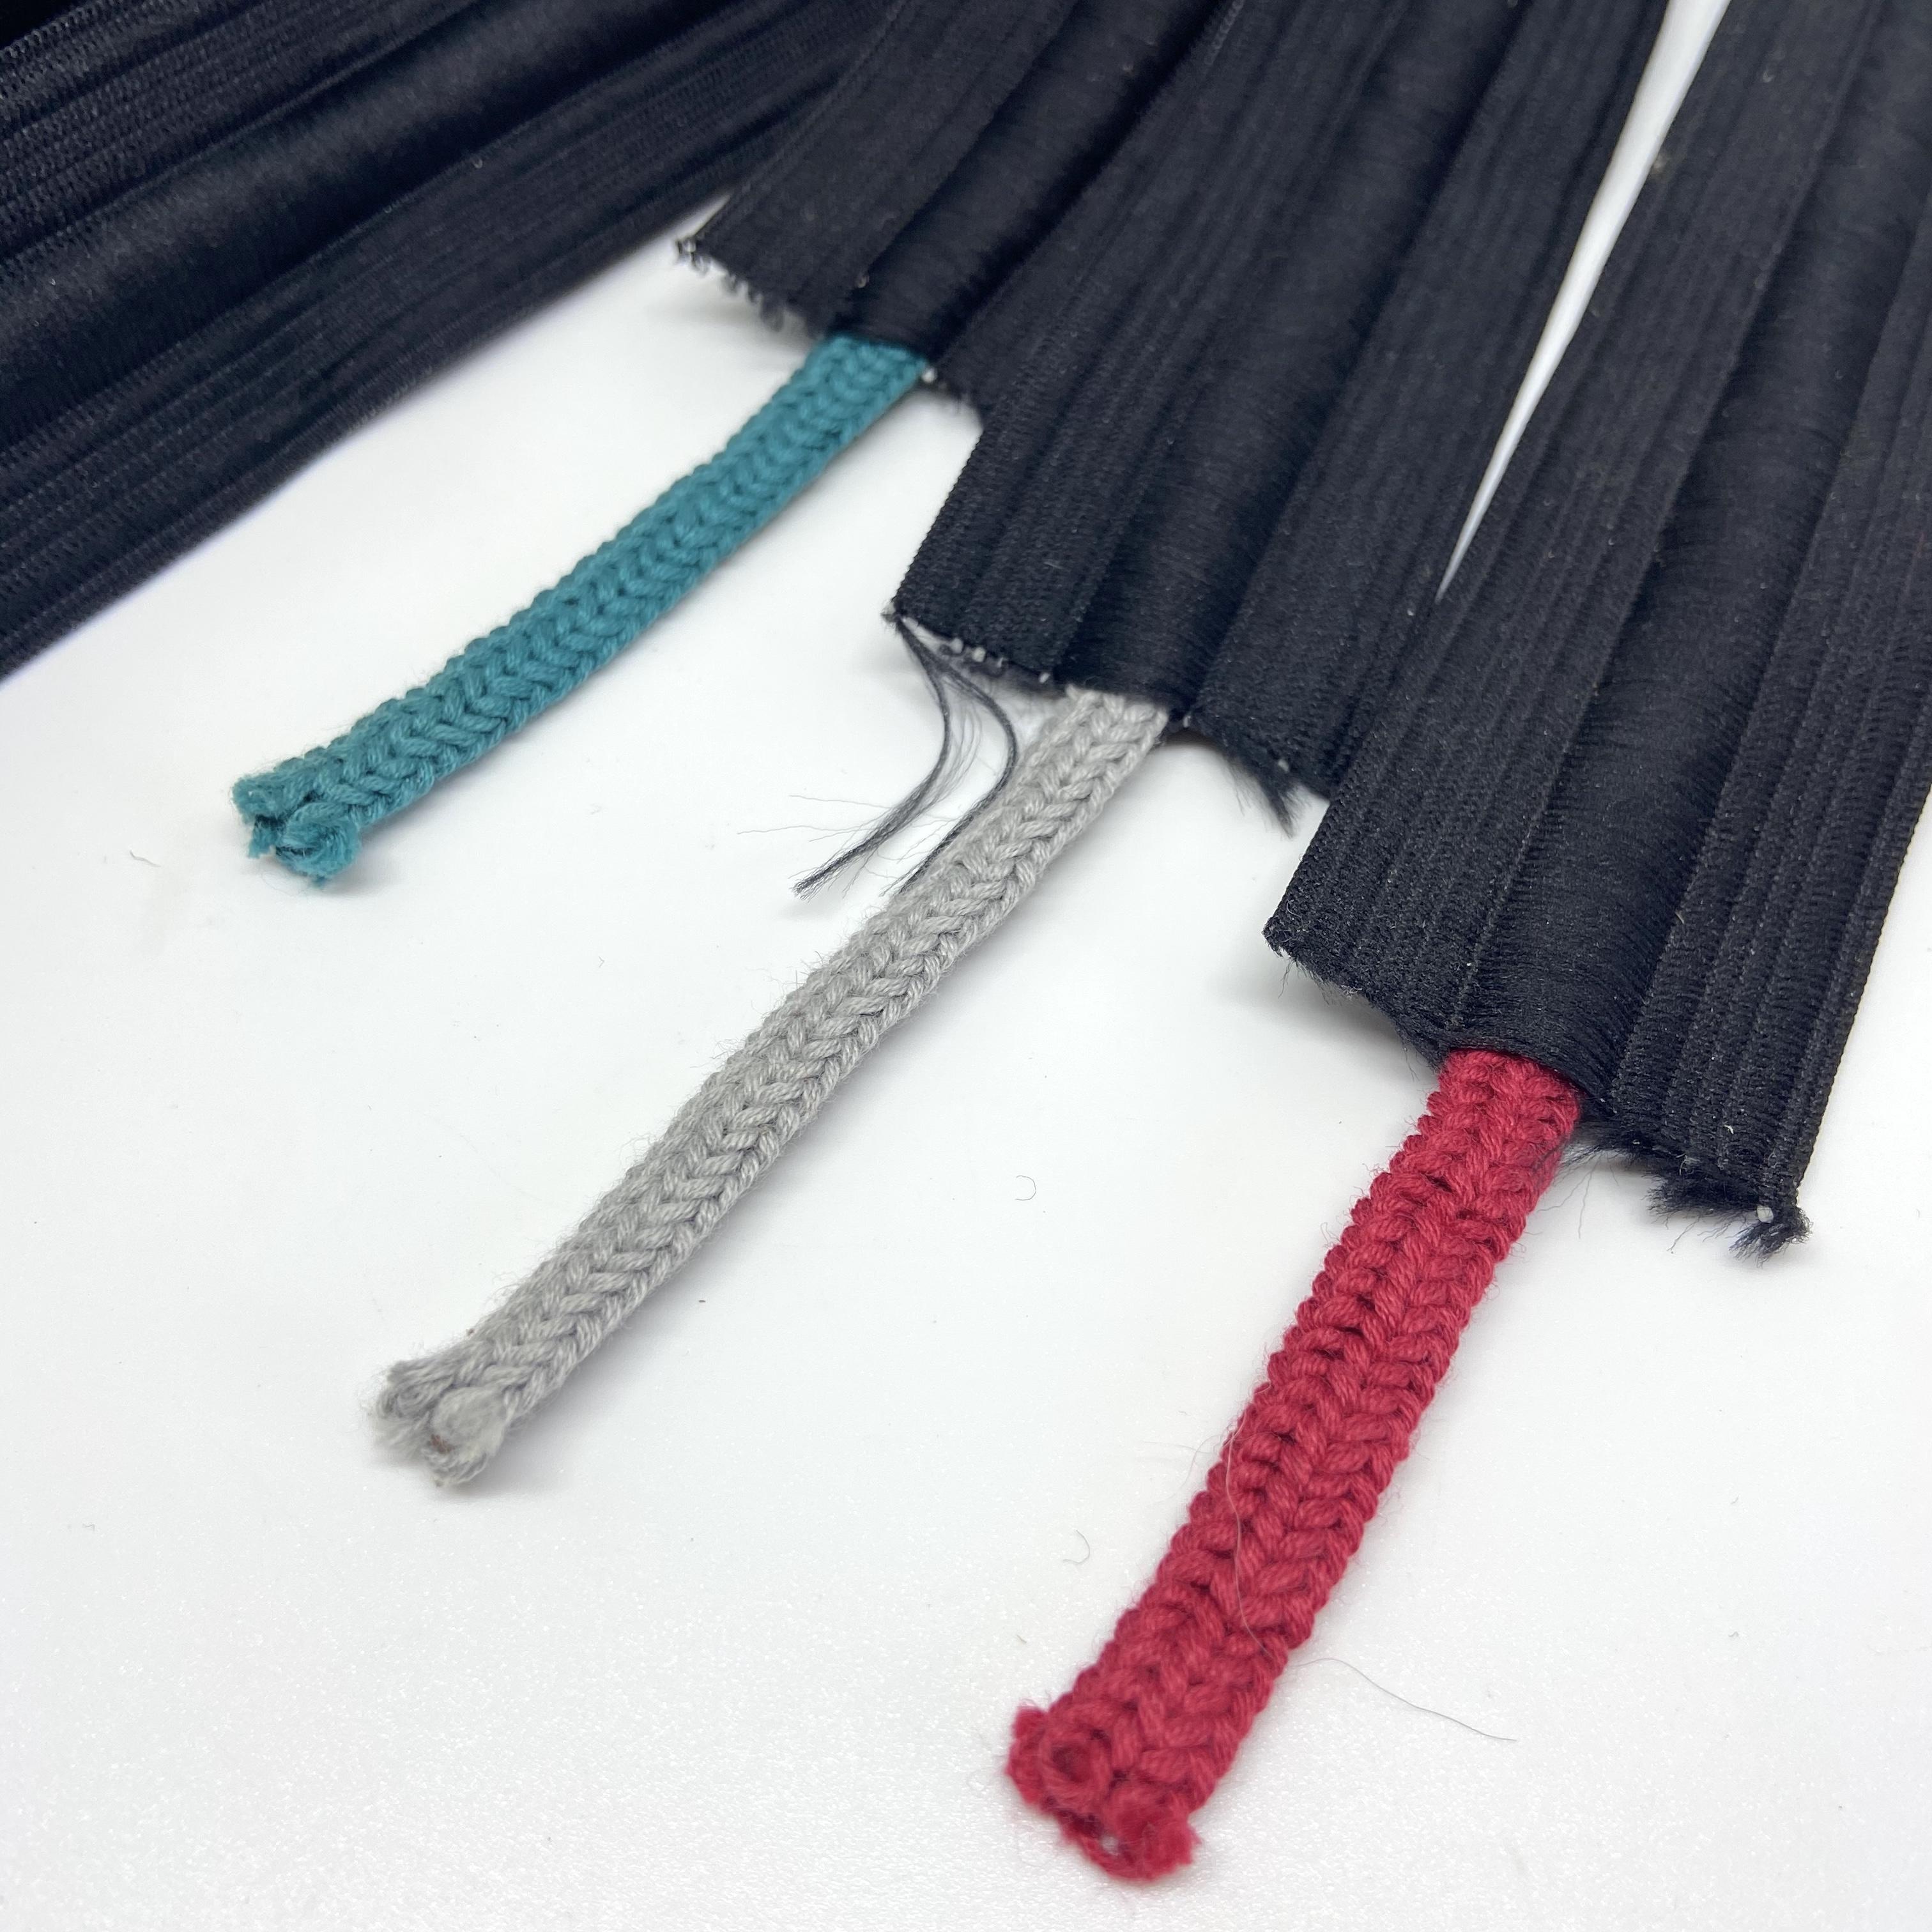 Drawstring elastic, 31mm wide with 5mm cord, Black elastic